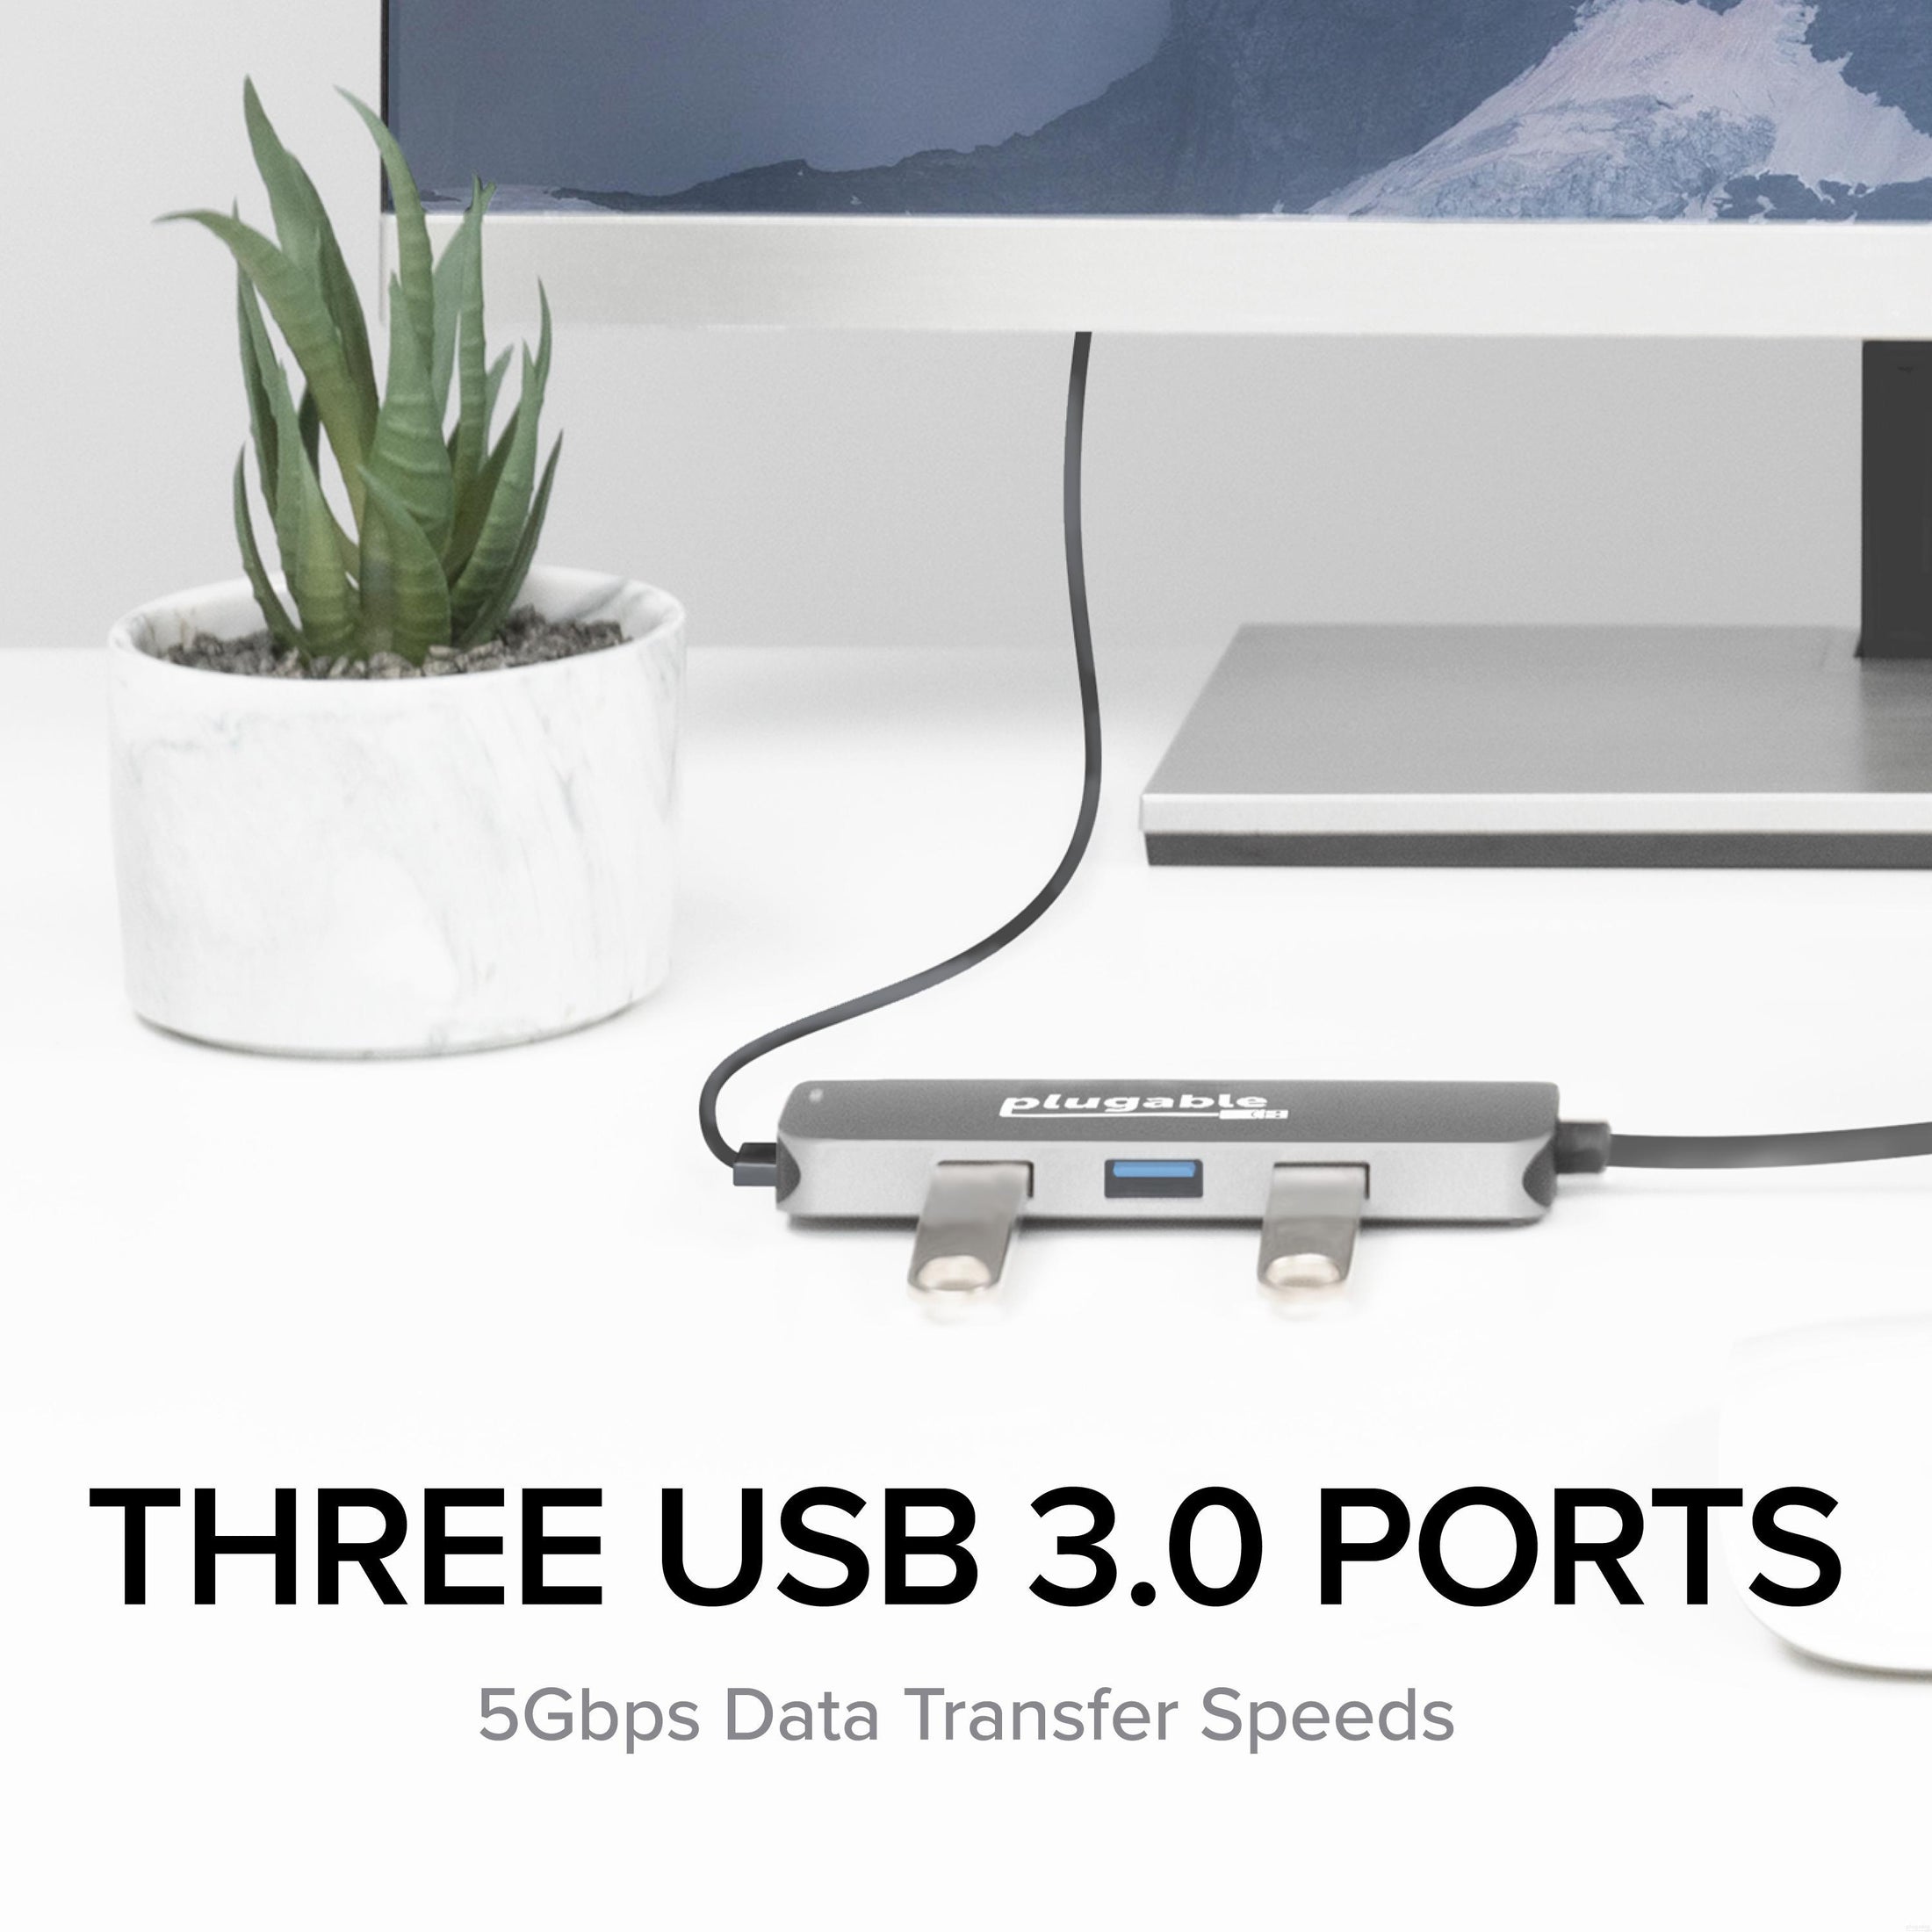  Plugable USB C Hub Multiport Adapter, 4 in 1, 100W Pass Through  Charging, USB C to HDMI 4K 60Hz, Multi USB Port Hub for Windows, Mac, Ipad  Pro, Chromebook, Thunderbolt (USBC-4IN1) 